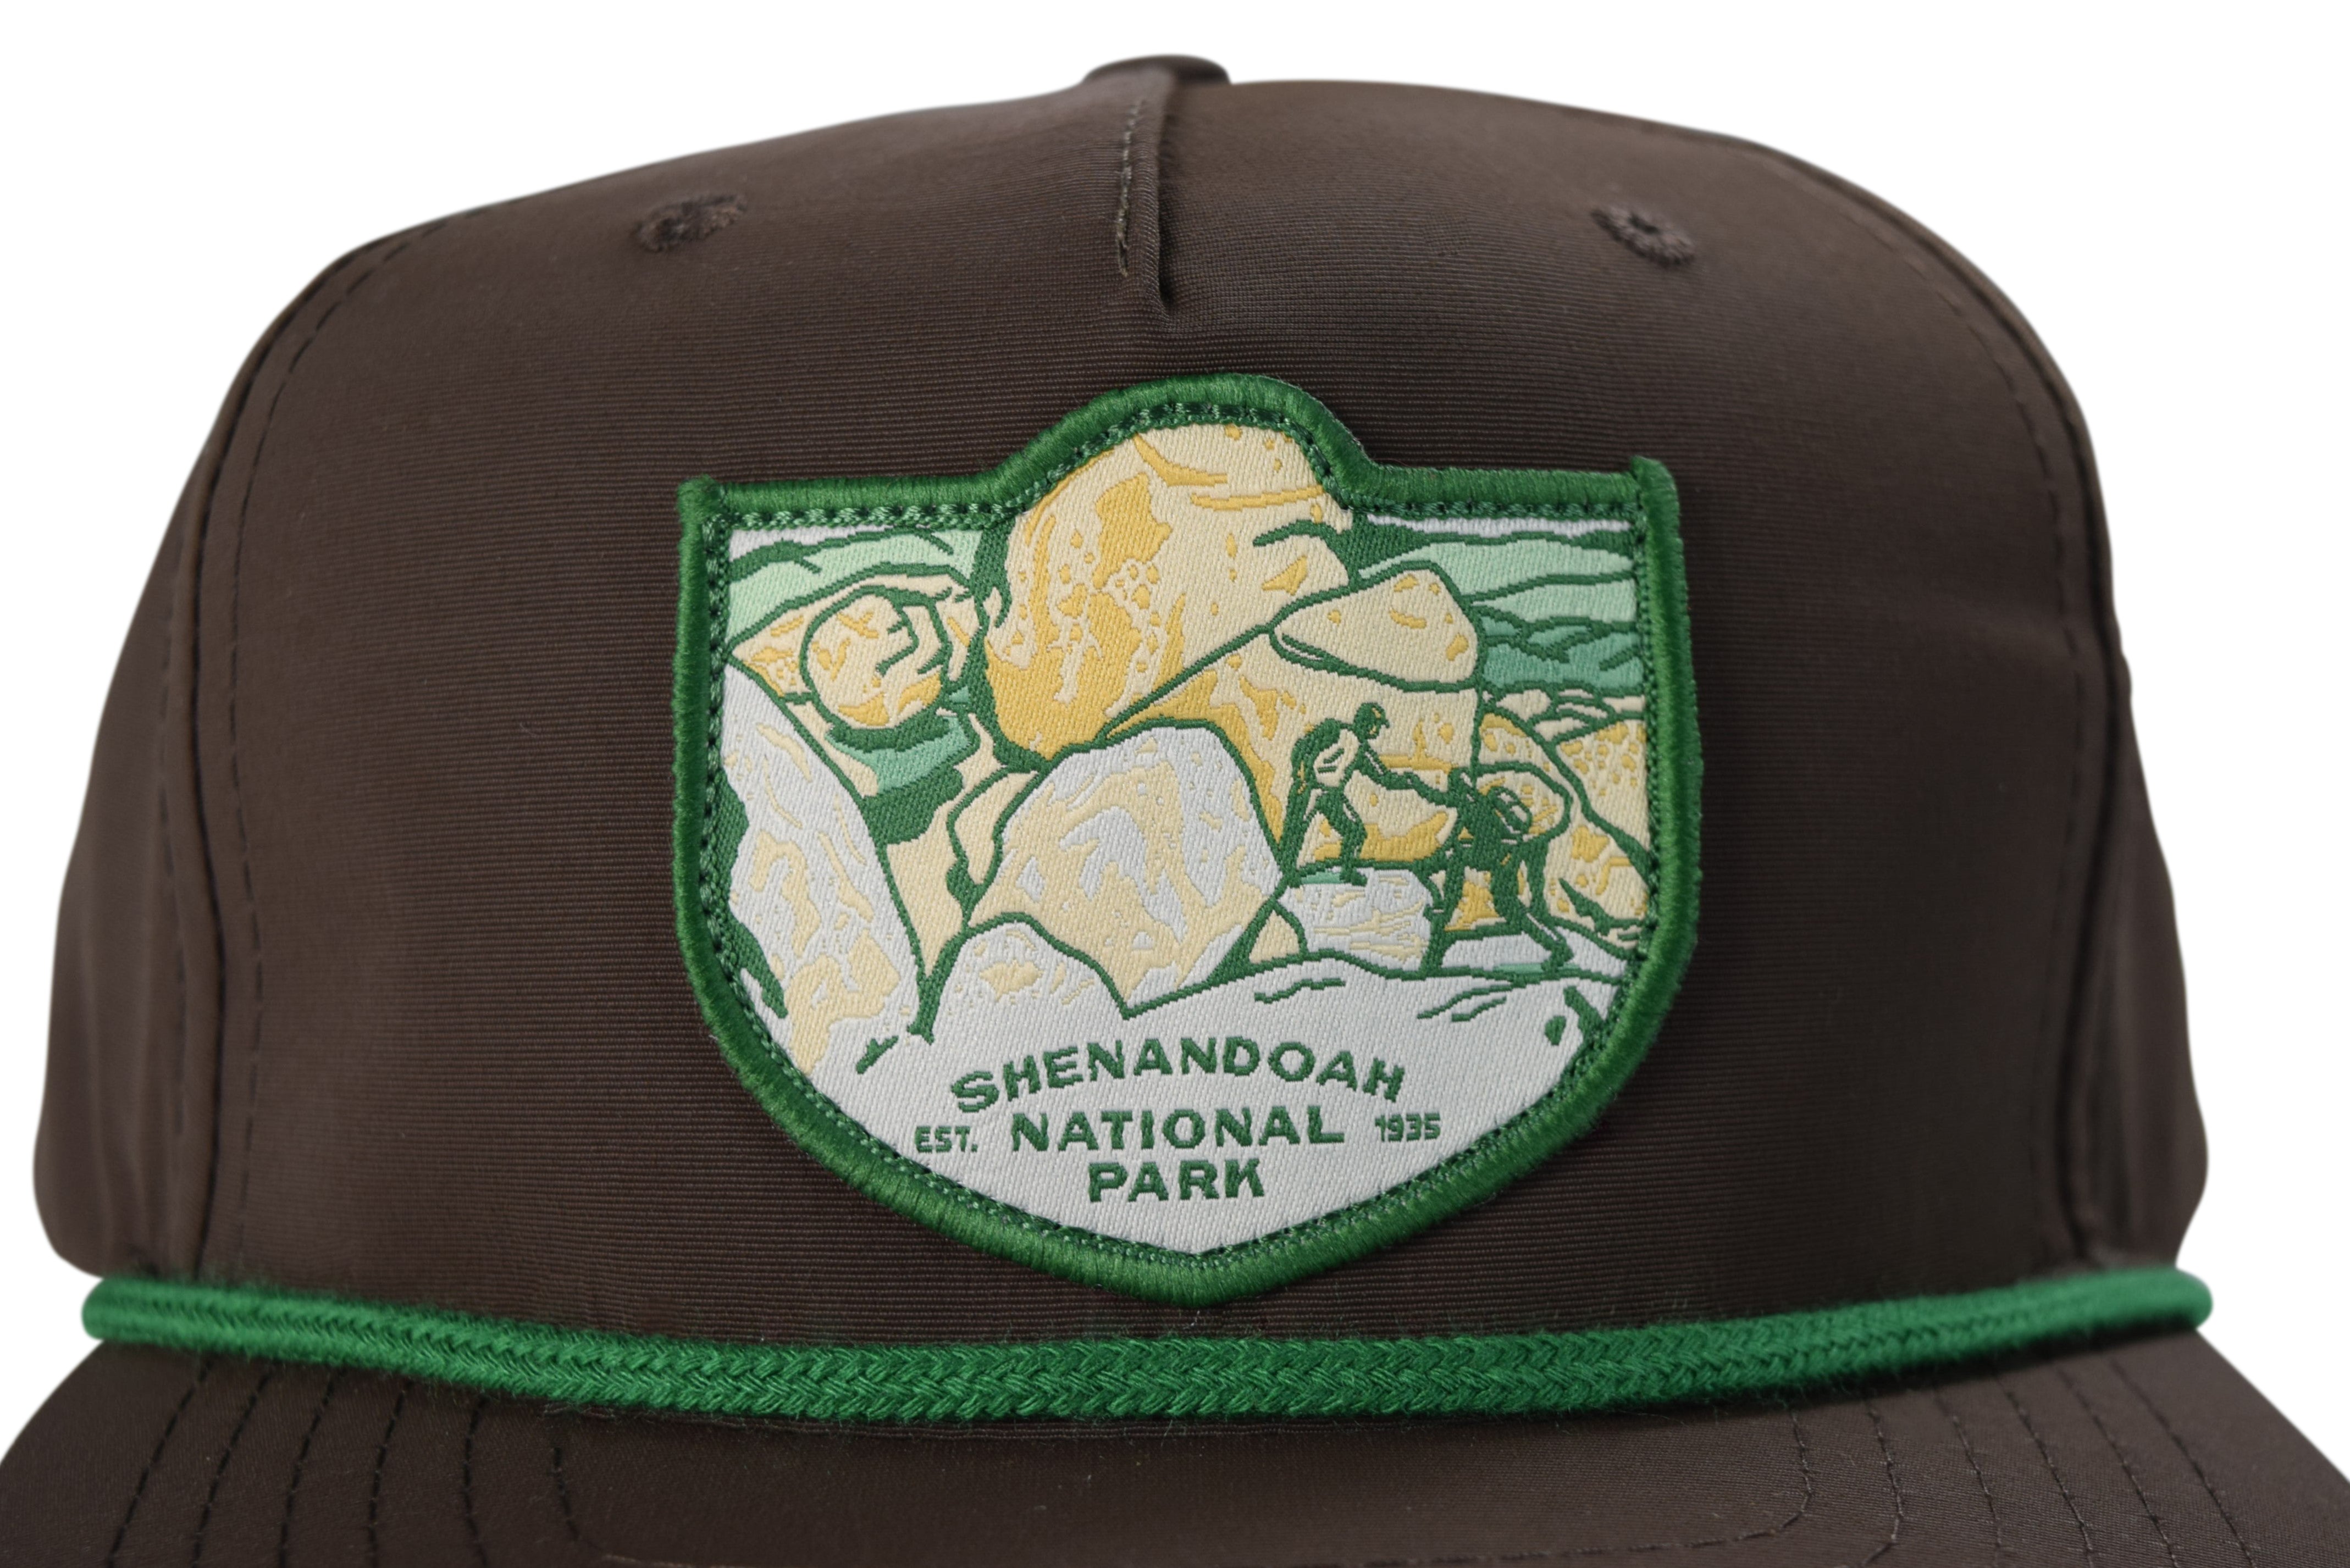 Sendero Provisions Co. Shenandoah National Park Snapback Hat (Dark Brown)